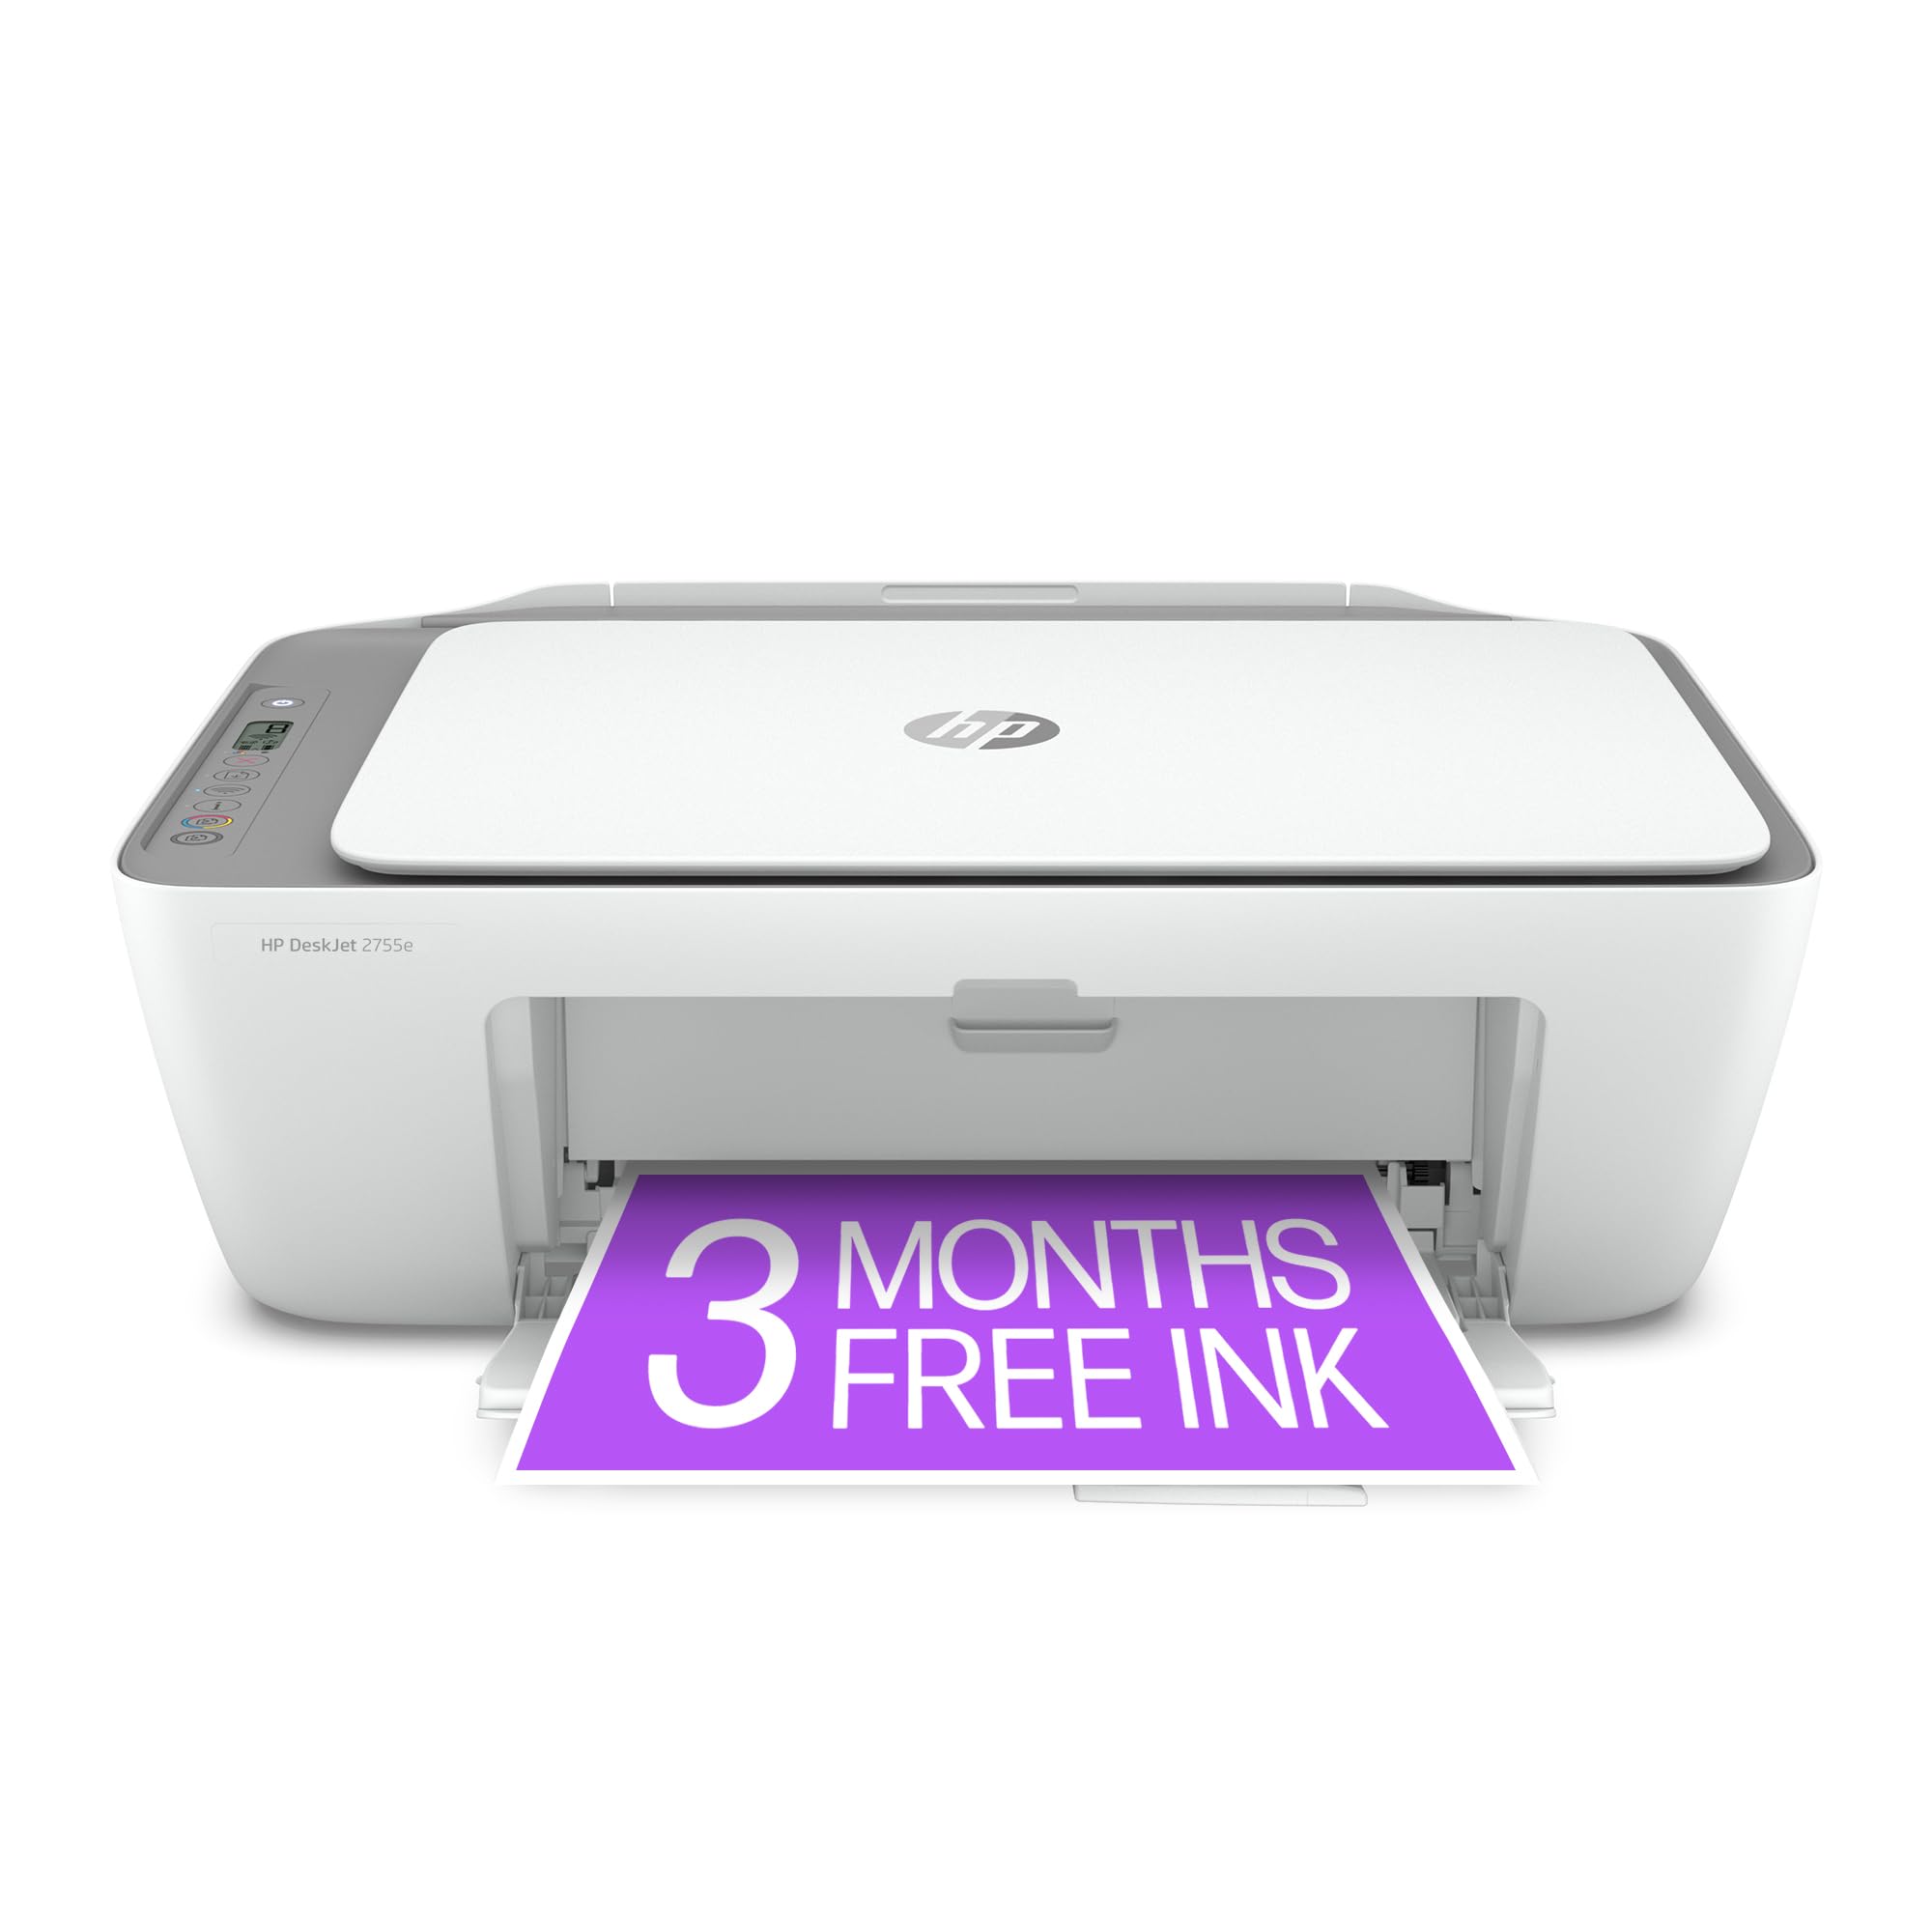 HP DeskJet 2755e Wireless Color inkjet-printer, Print, scan, copy, Easy setup, Mobile printing, Best-for home, for $39.99